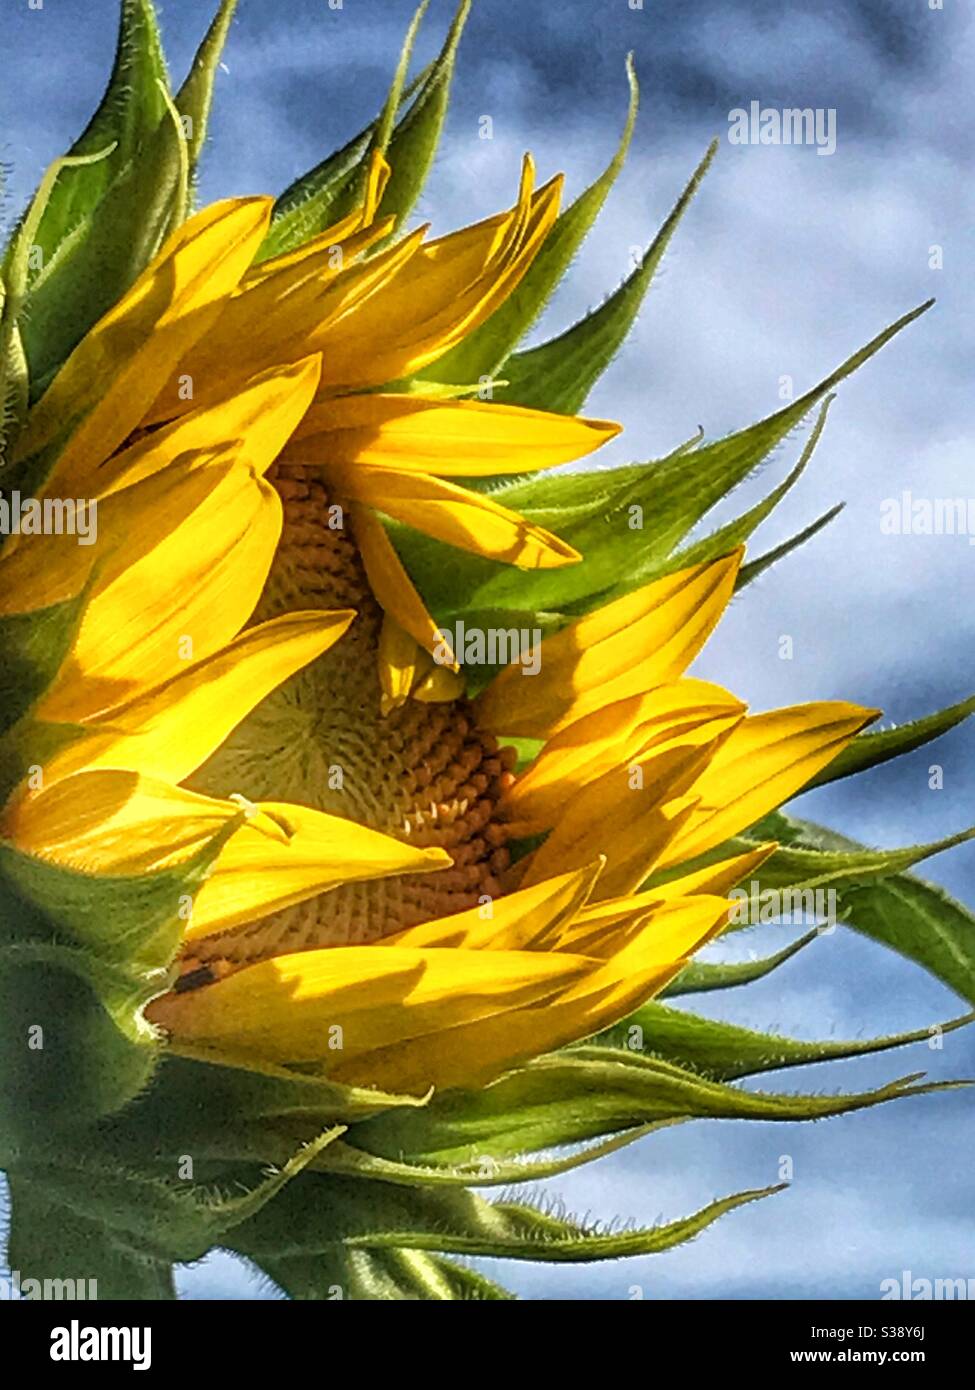 Sunflower blooming in warm sunlight Stock Photo